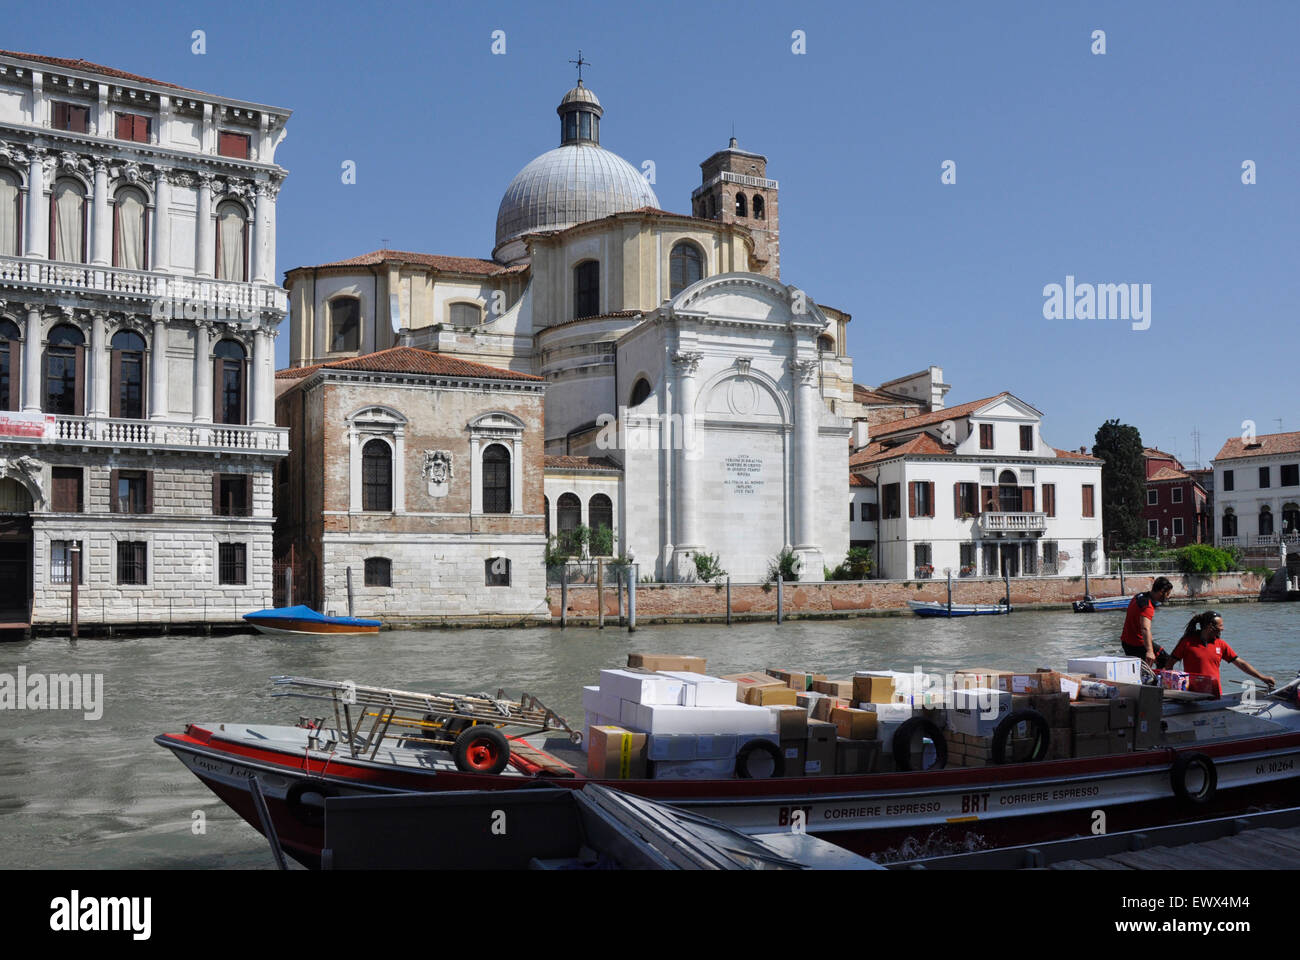 Italy Venice Canale Grande - Cannaregio region - work boat being unloaded on Riva di Biasio - opposite San Geremia - sunlight Stock Photo